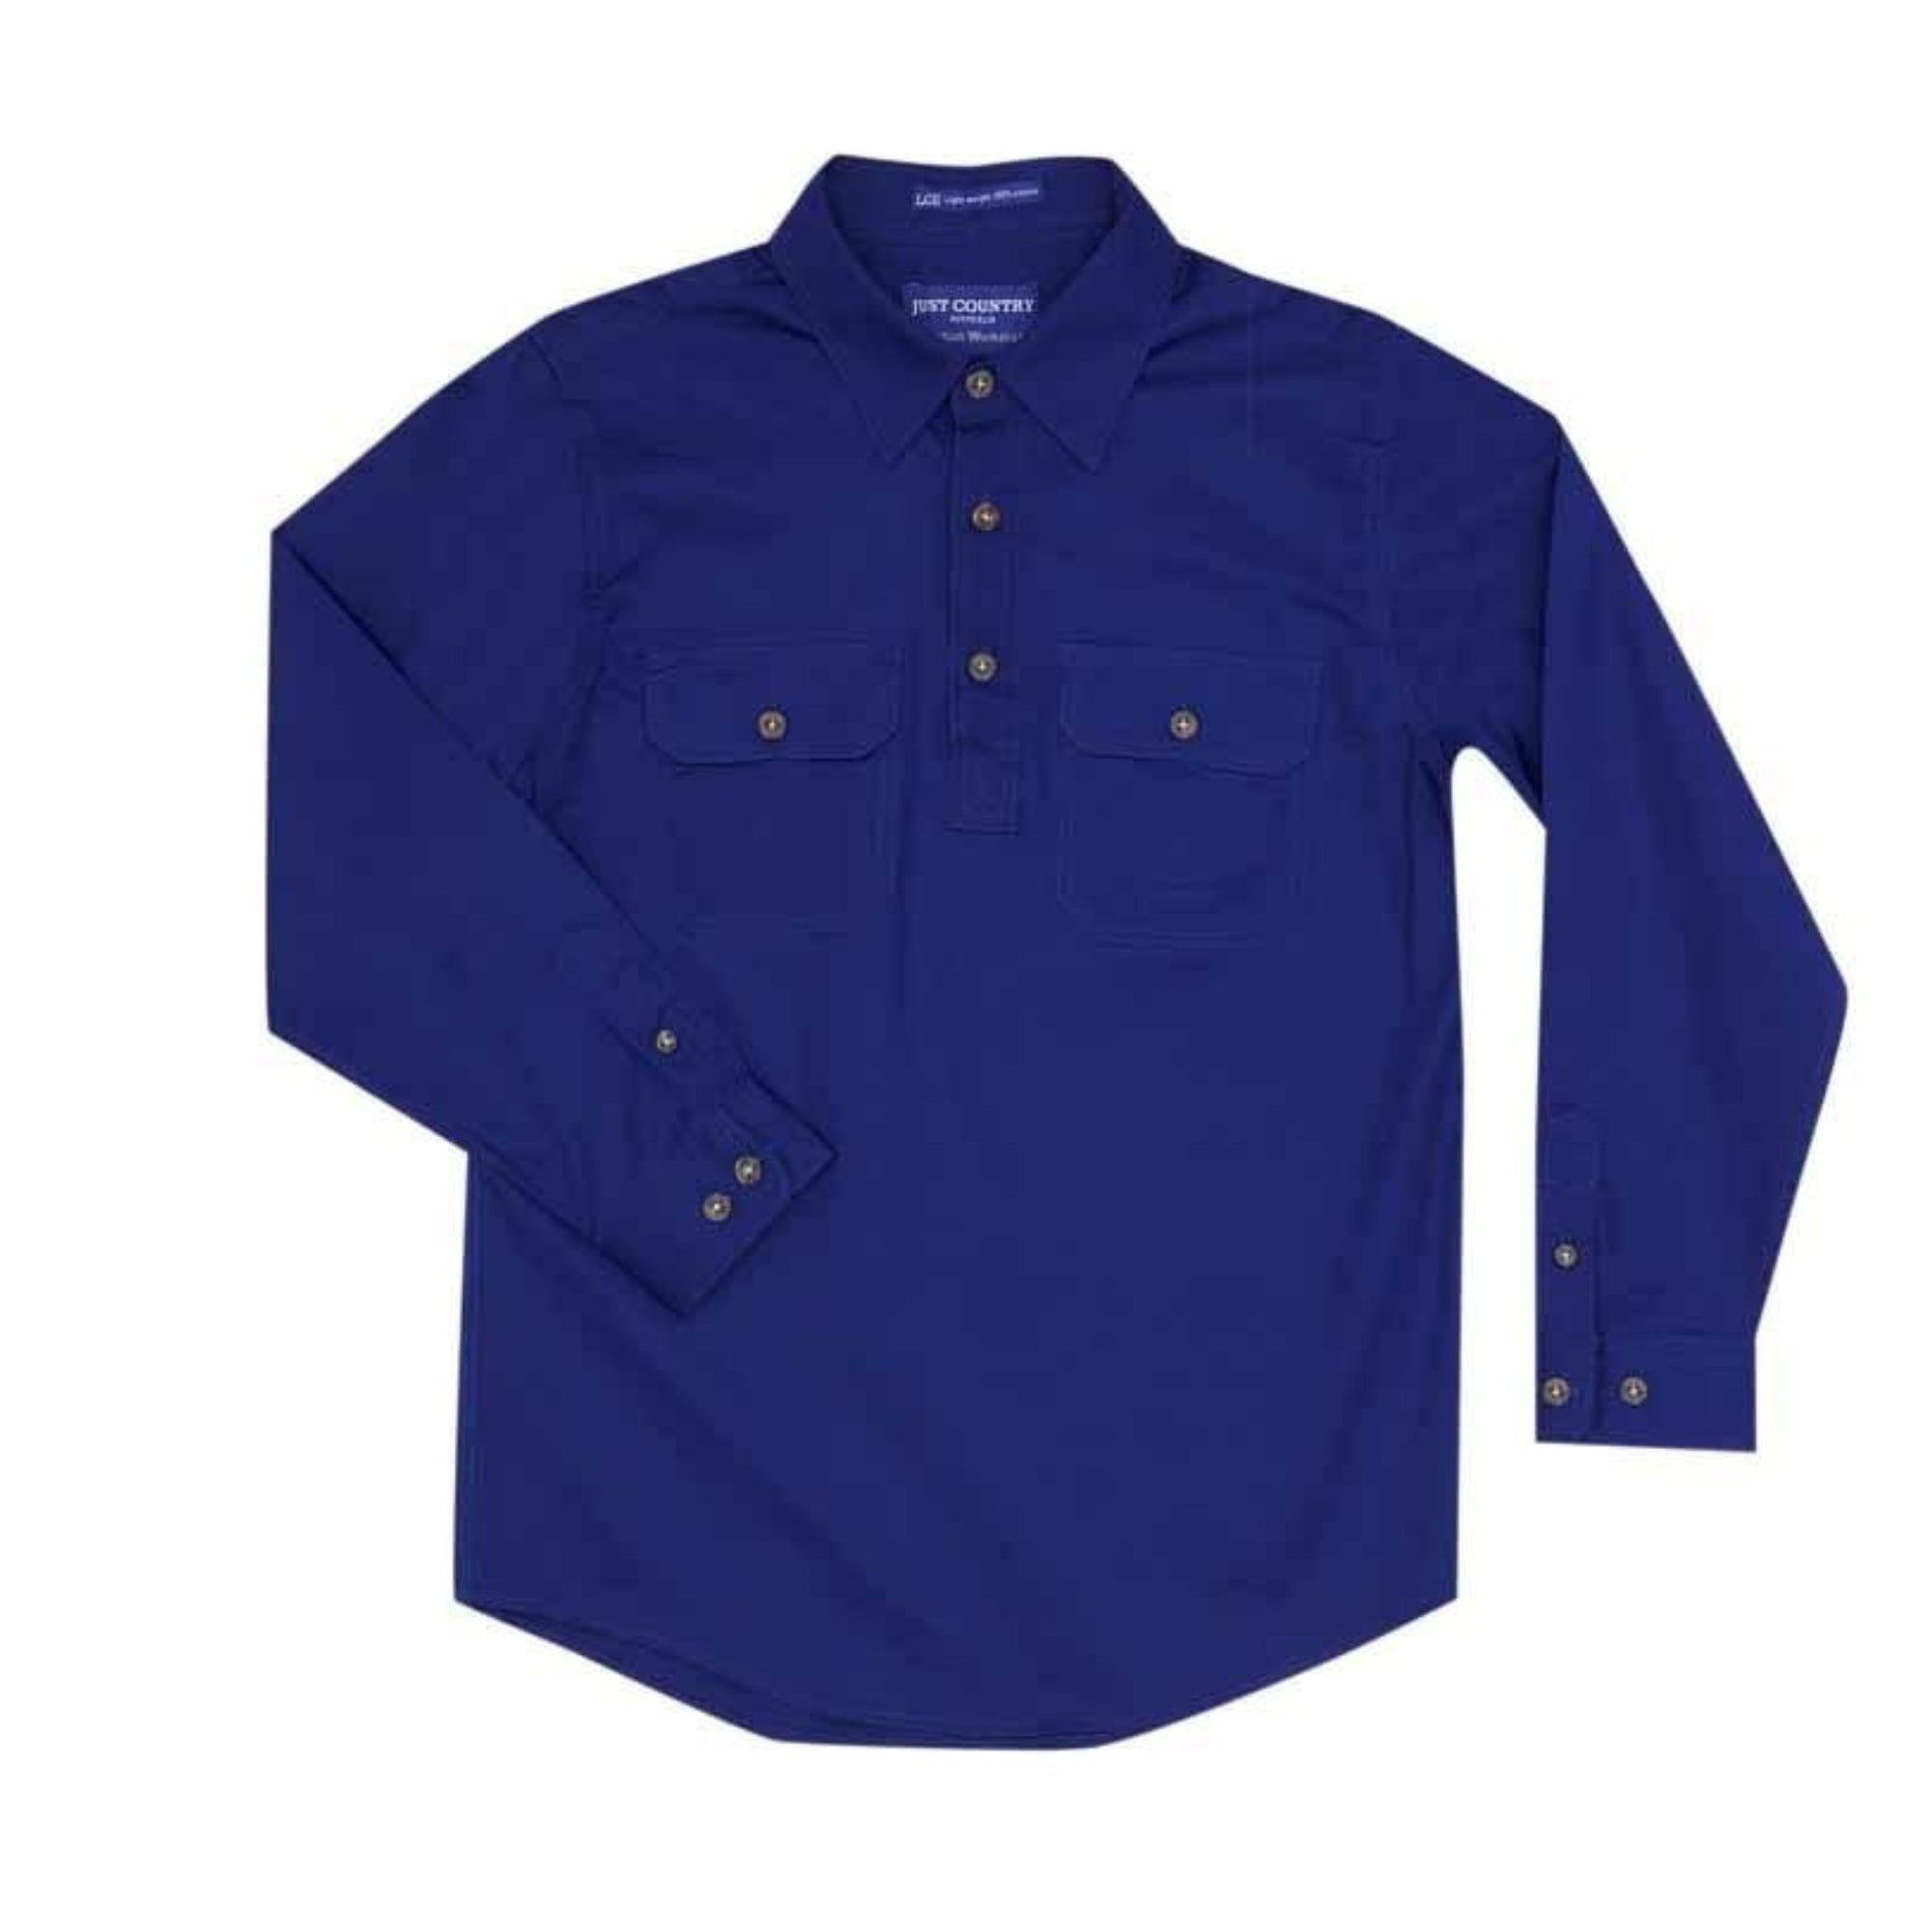 Cobalt cotton work shirt with brown half buttons.